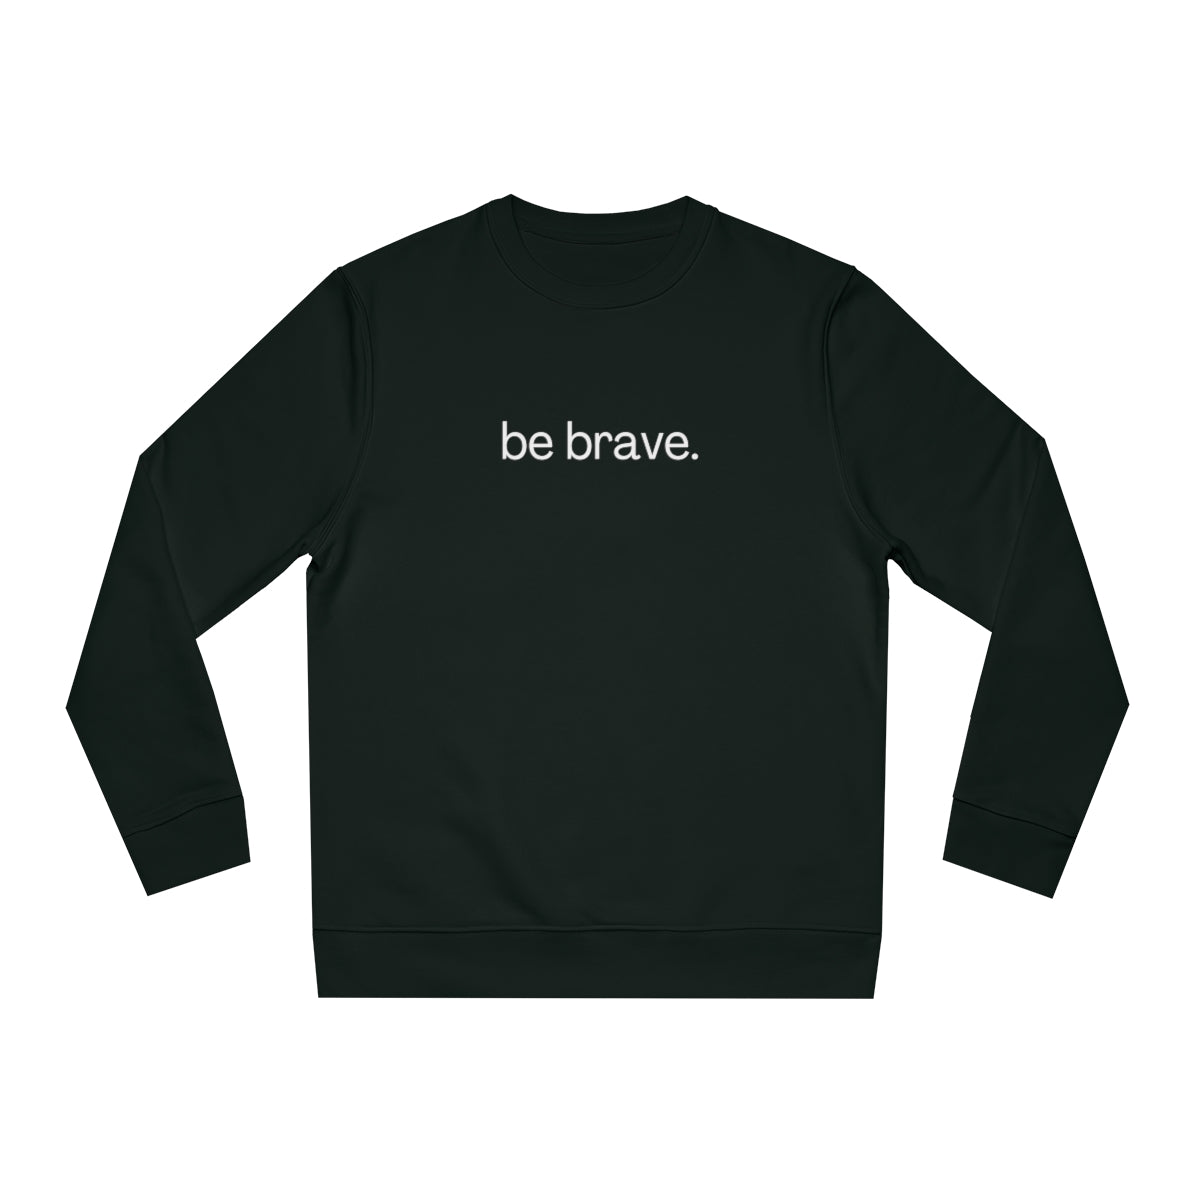 be brave. - Unisex Crewneck